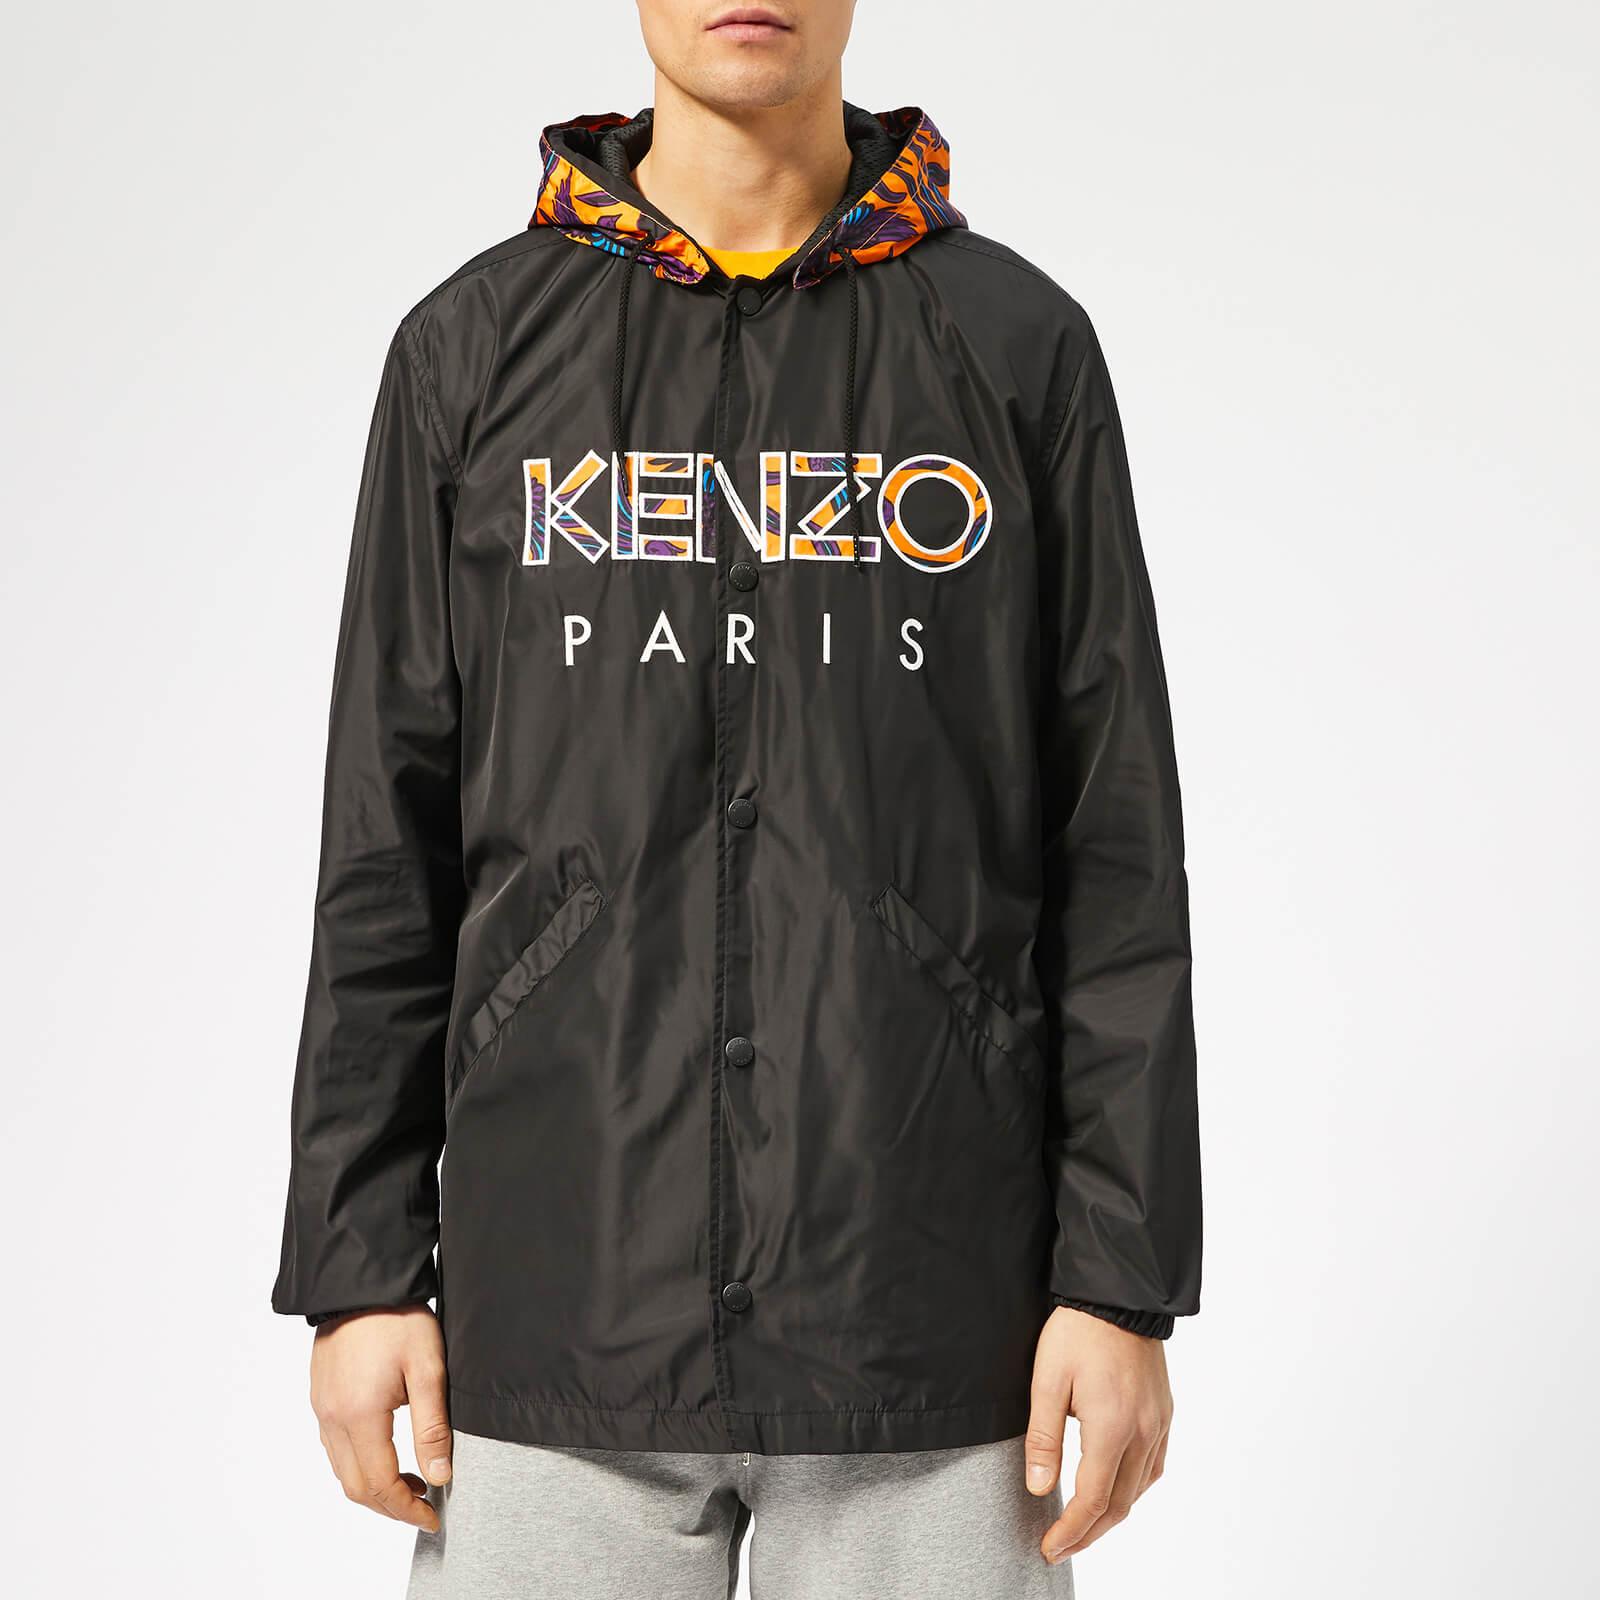 KENZO Logo Coat in Black for Men - Lyst